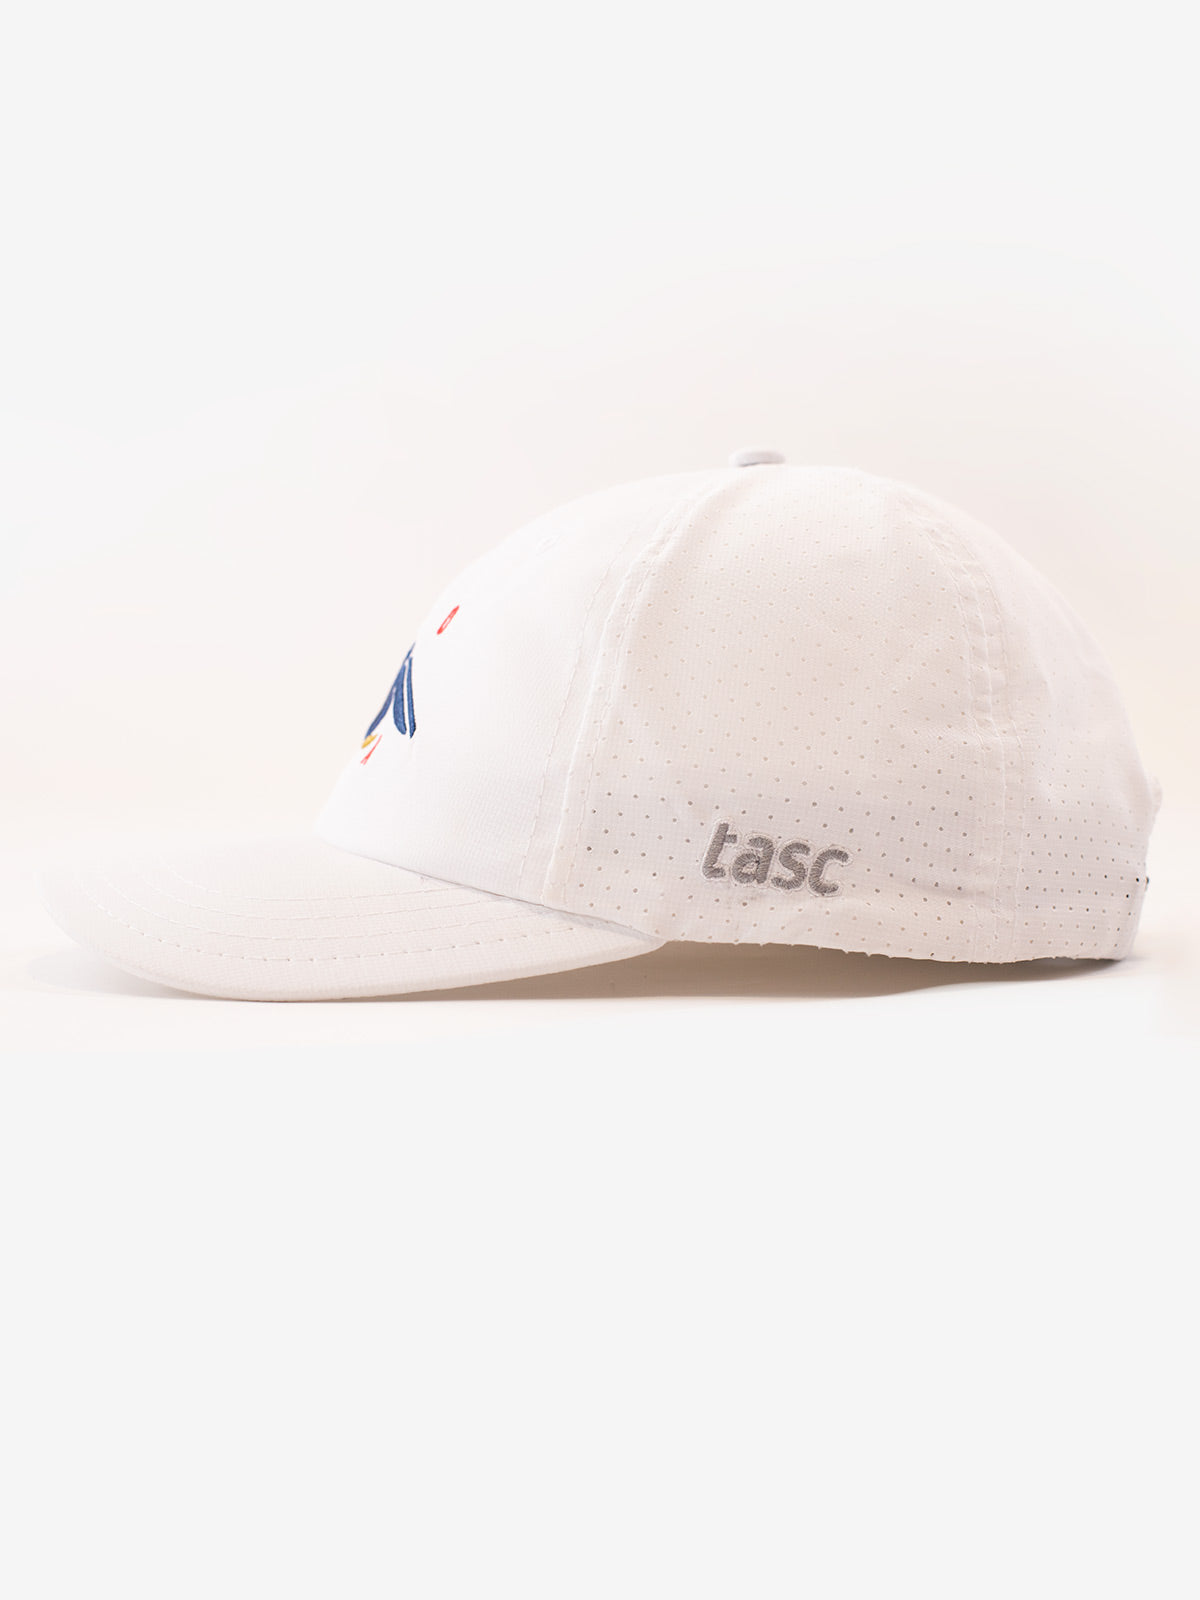 Signature State Hat tasc performance (White)